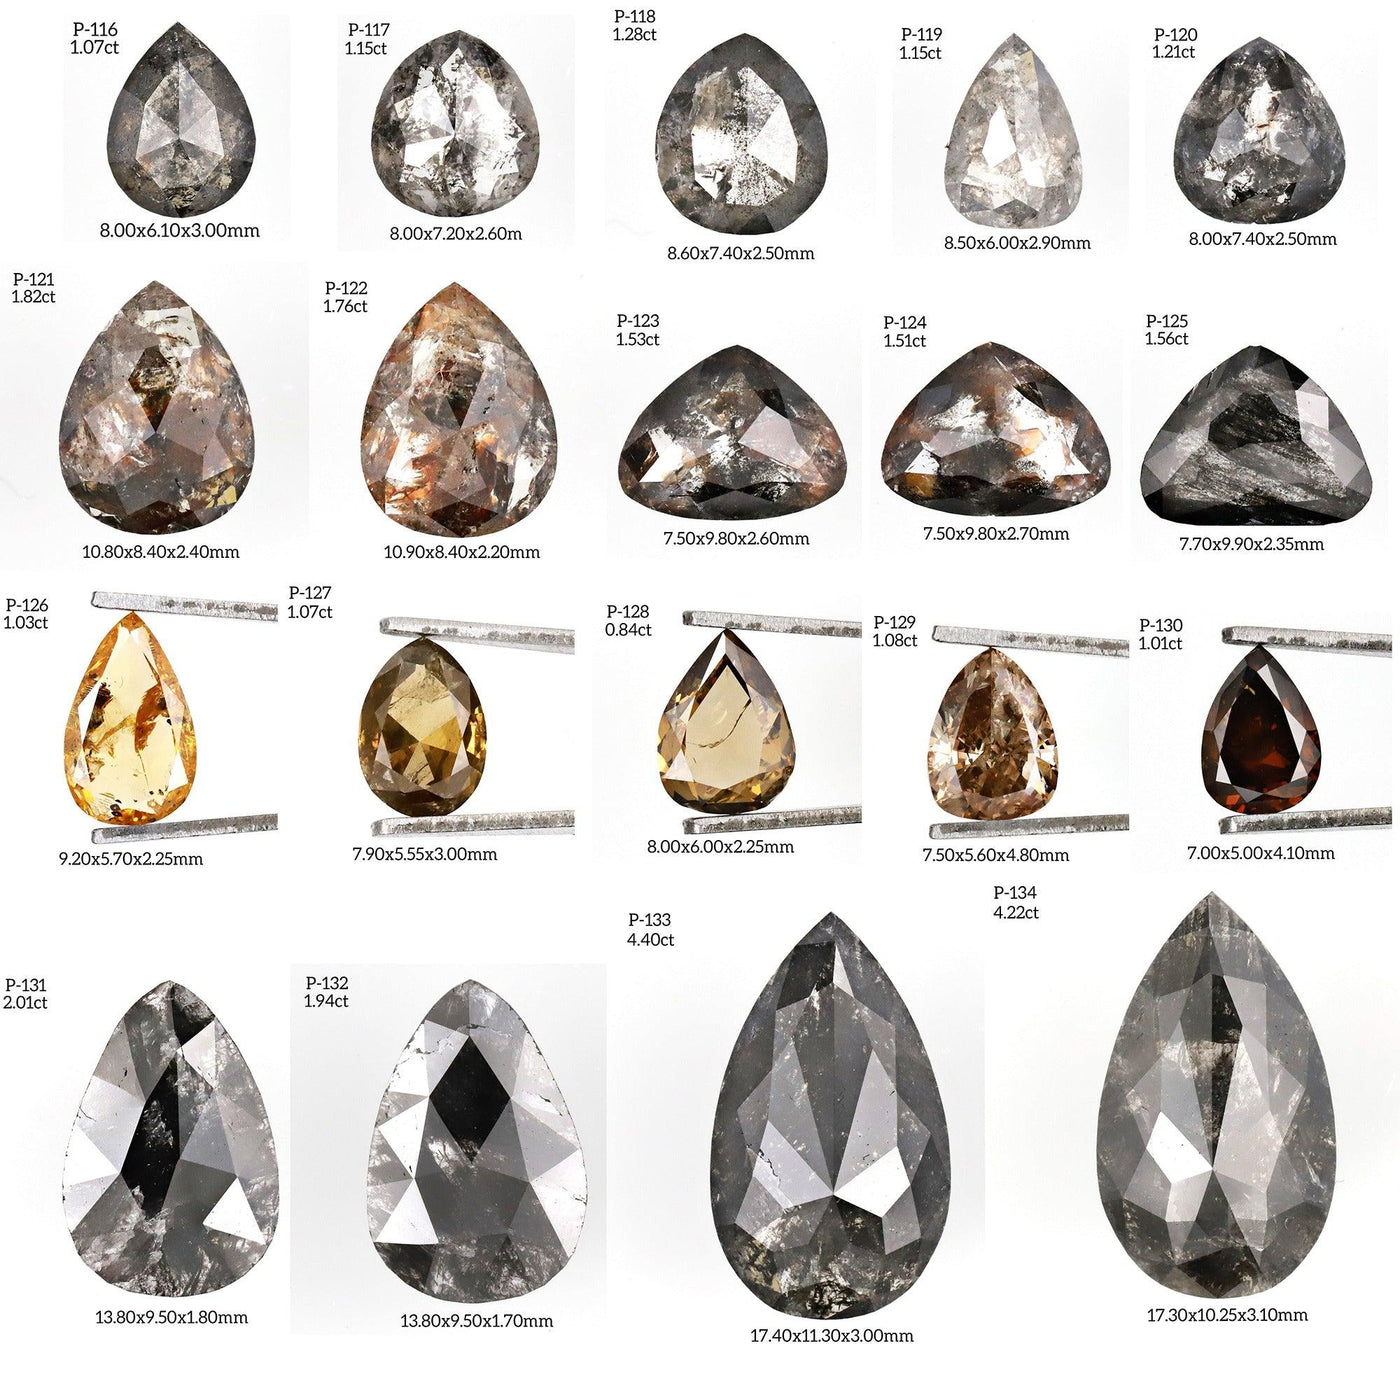 Pear Diamond Ring | Salt and pepper Ring | Pear Salt and pepper Ring | Wedding Ring - Rubysta